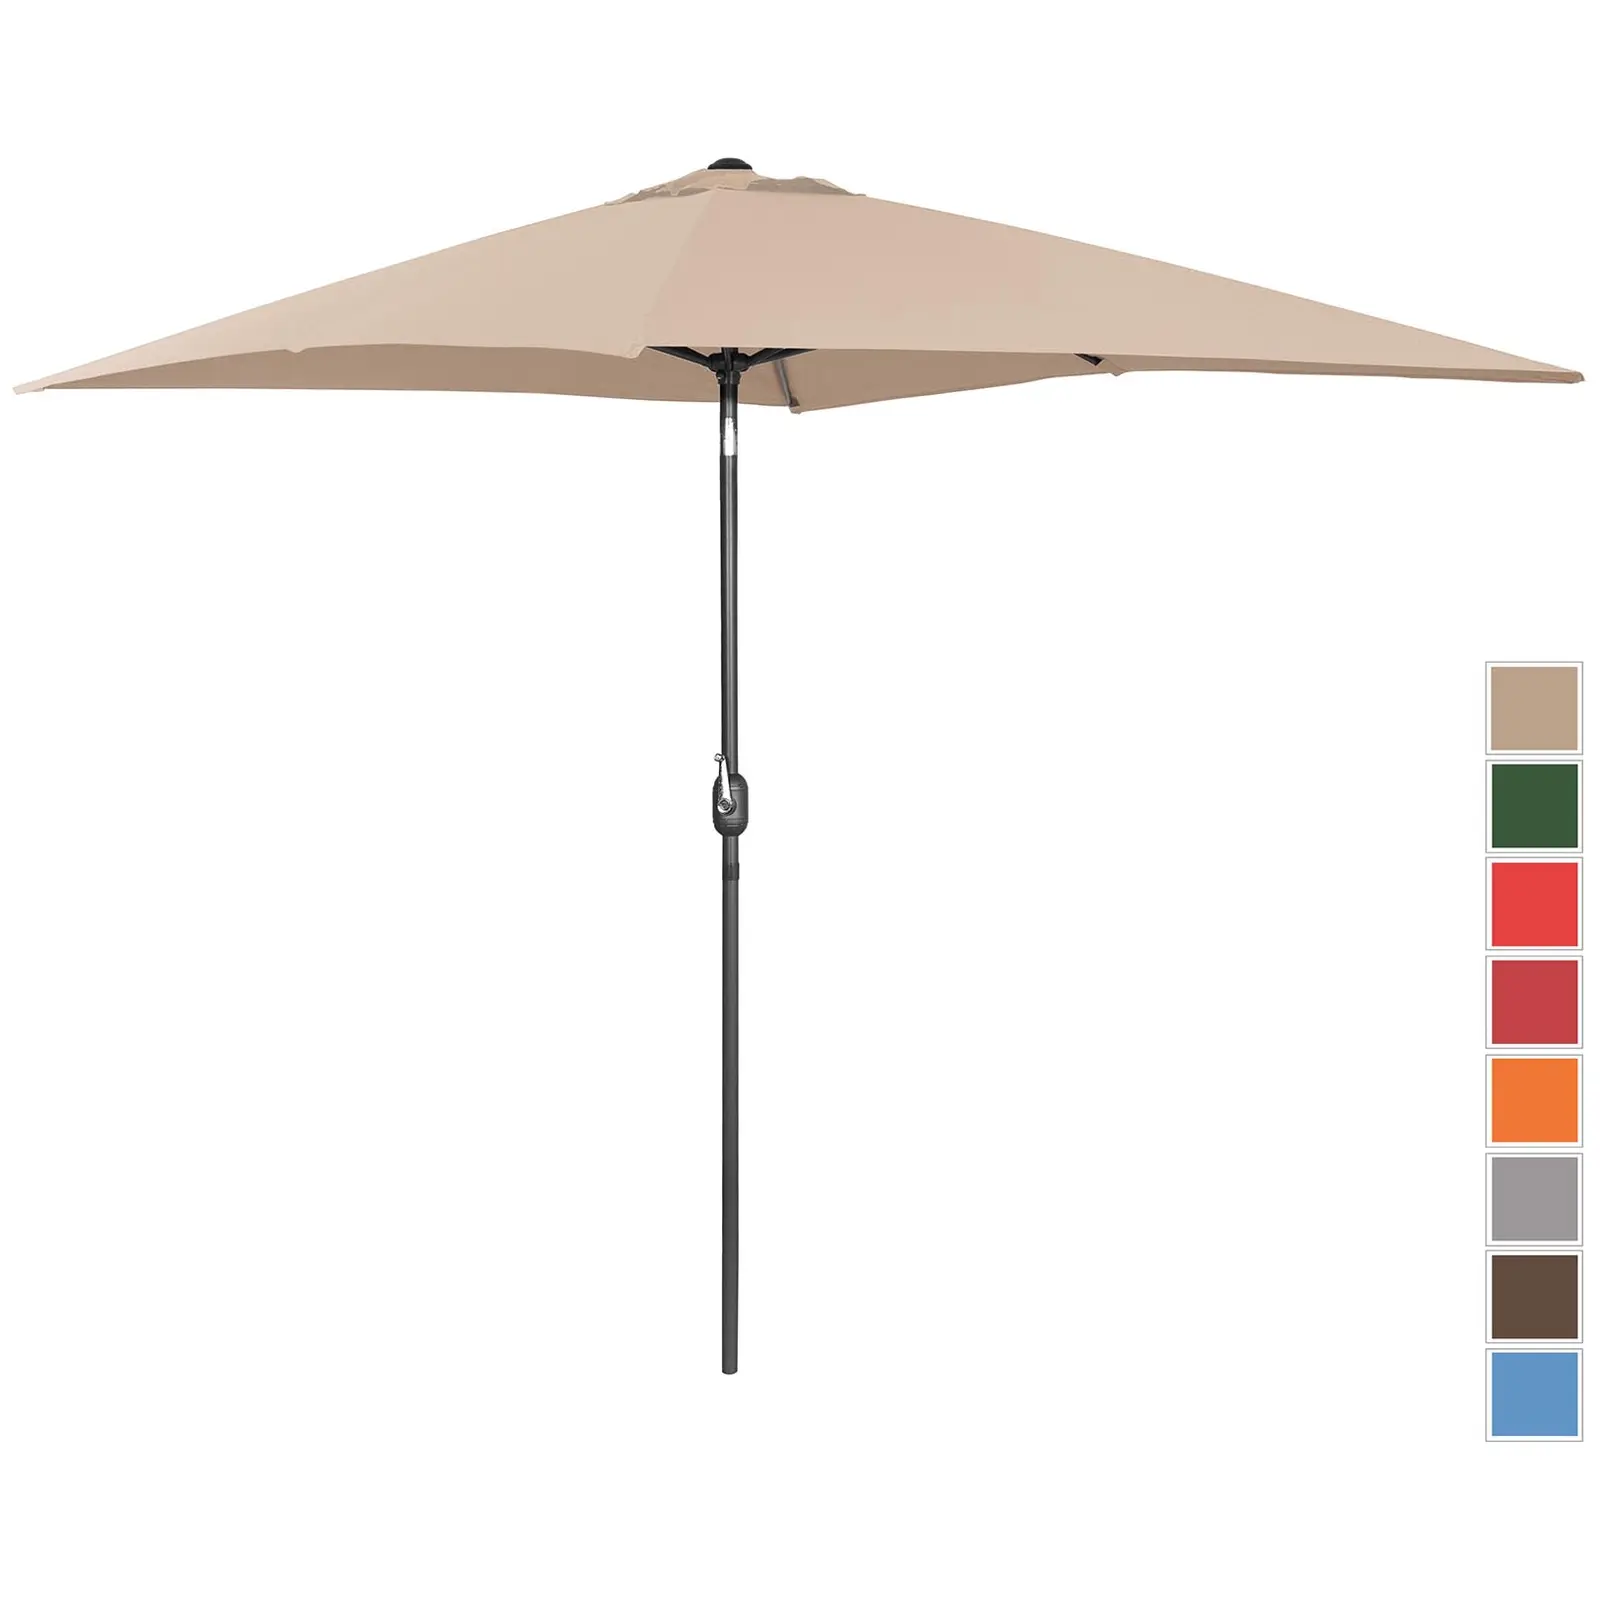 Occasion Grand parasol - Crème - Rectangulaire - 200 x 300 cm - Inclinable